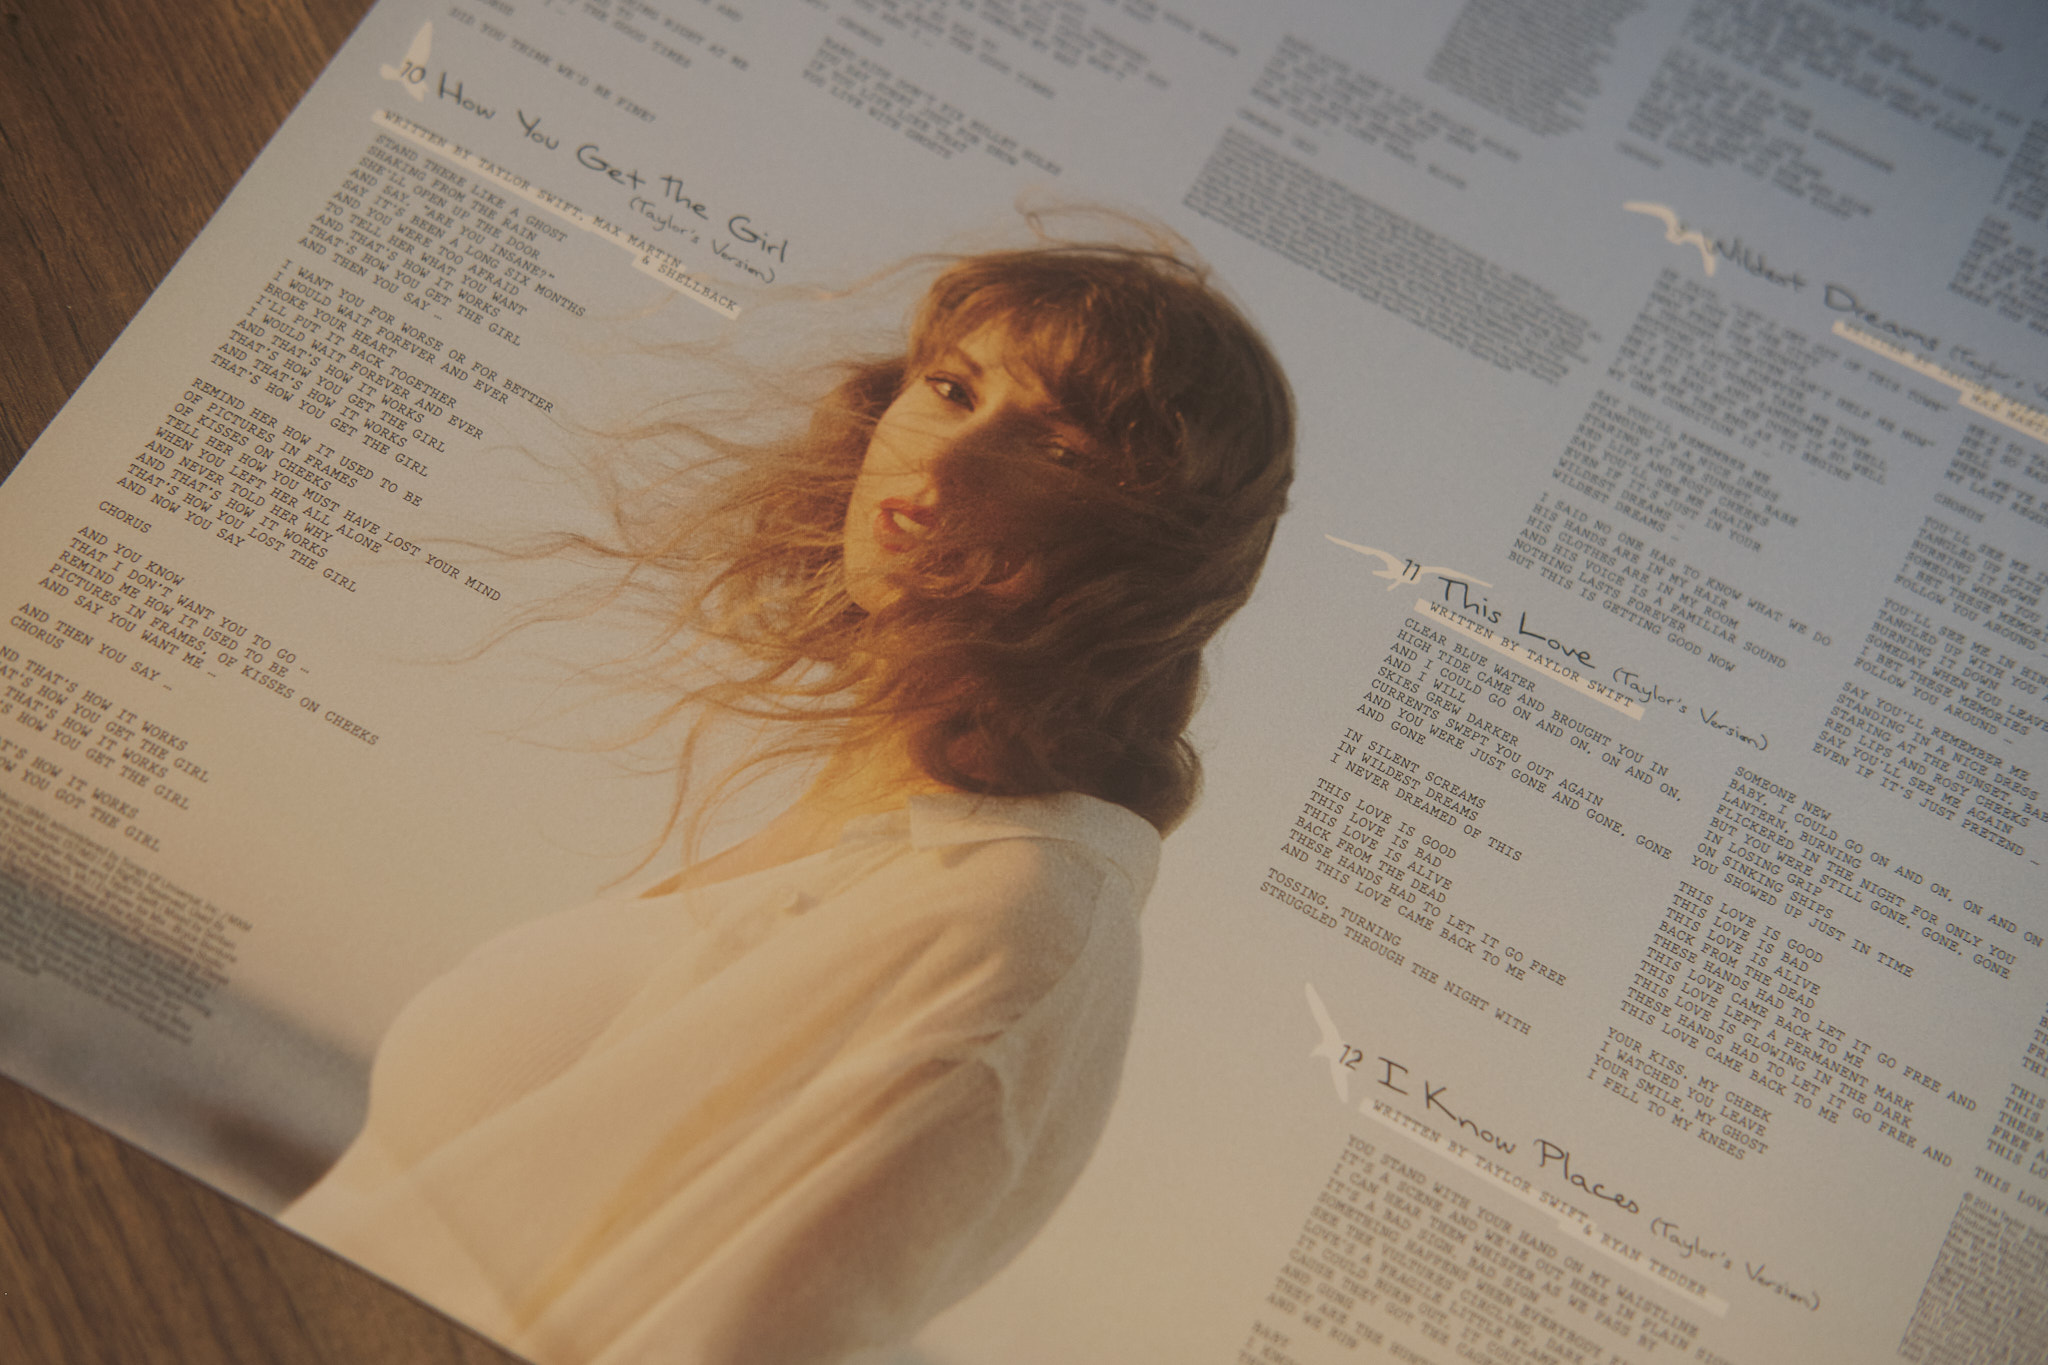 1989 Taylor's Version Vinyl Side A